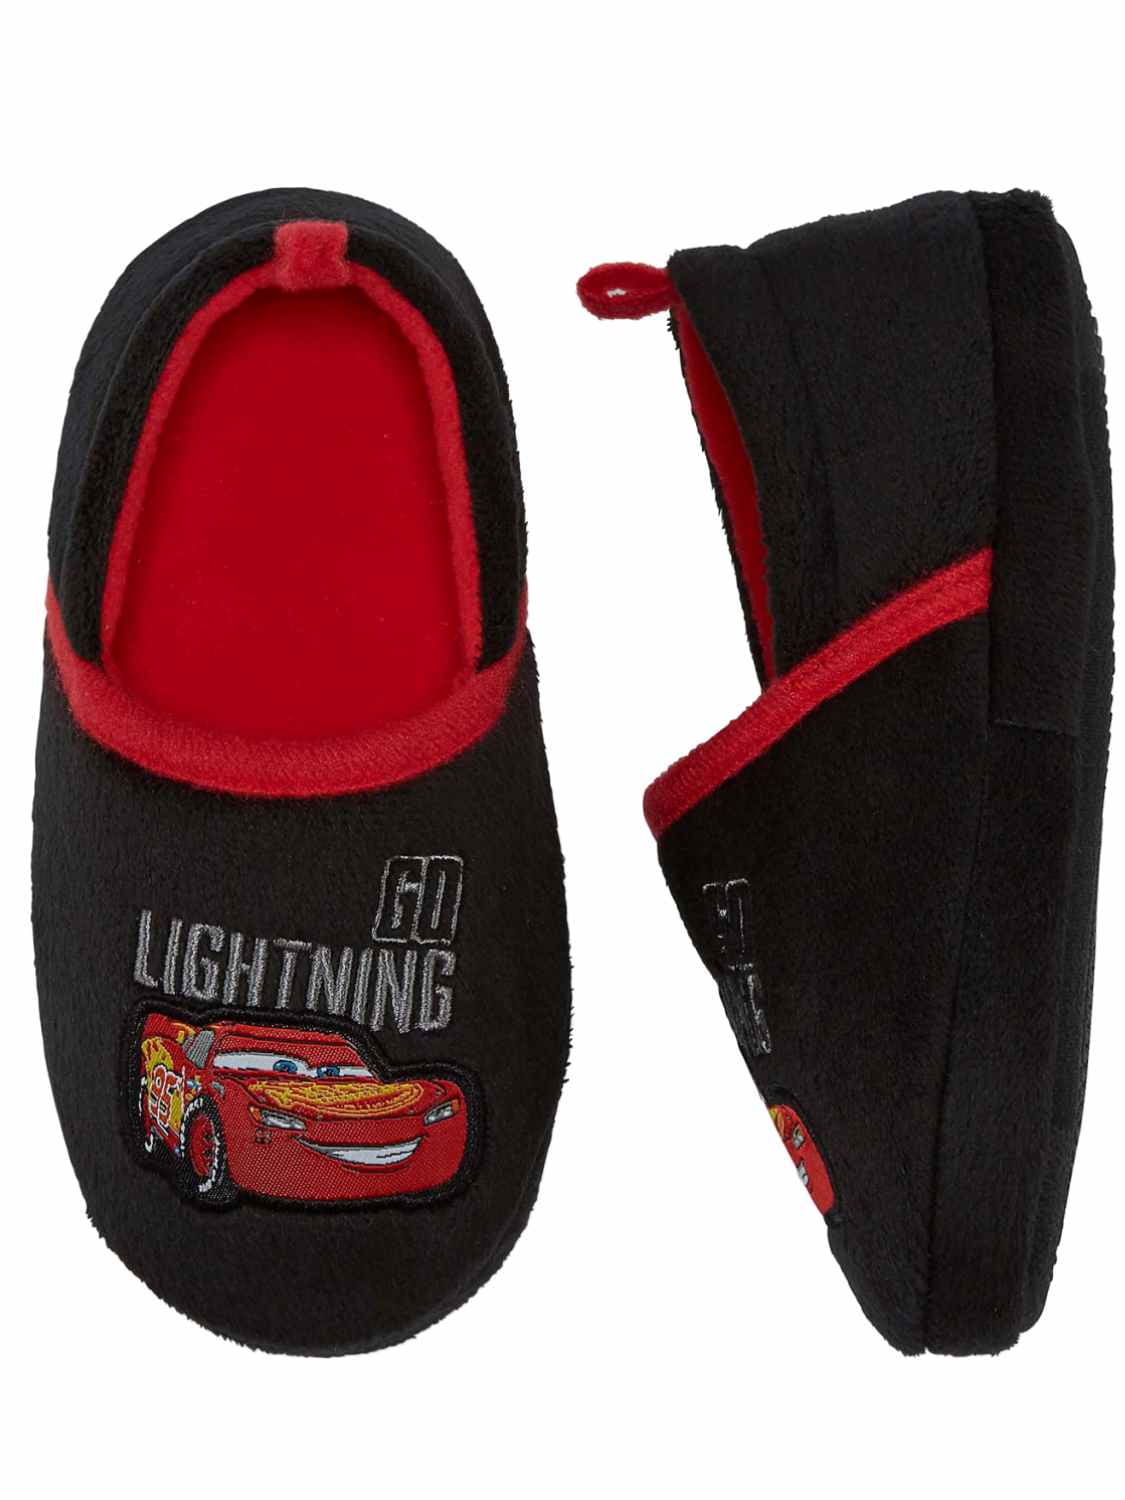 lightning mcqueen slippers walmart